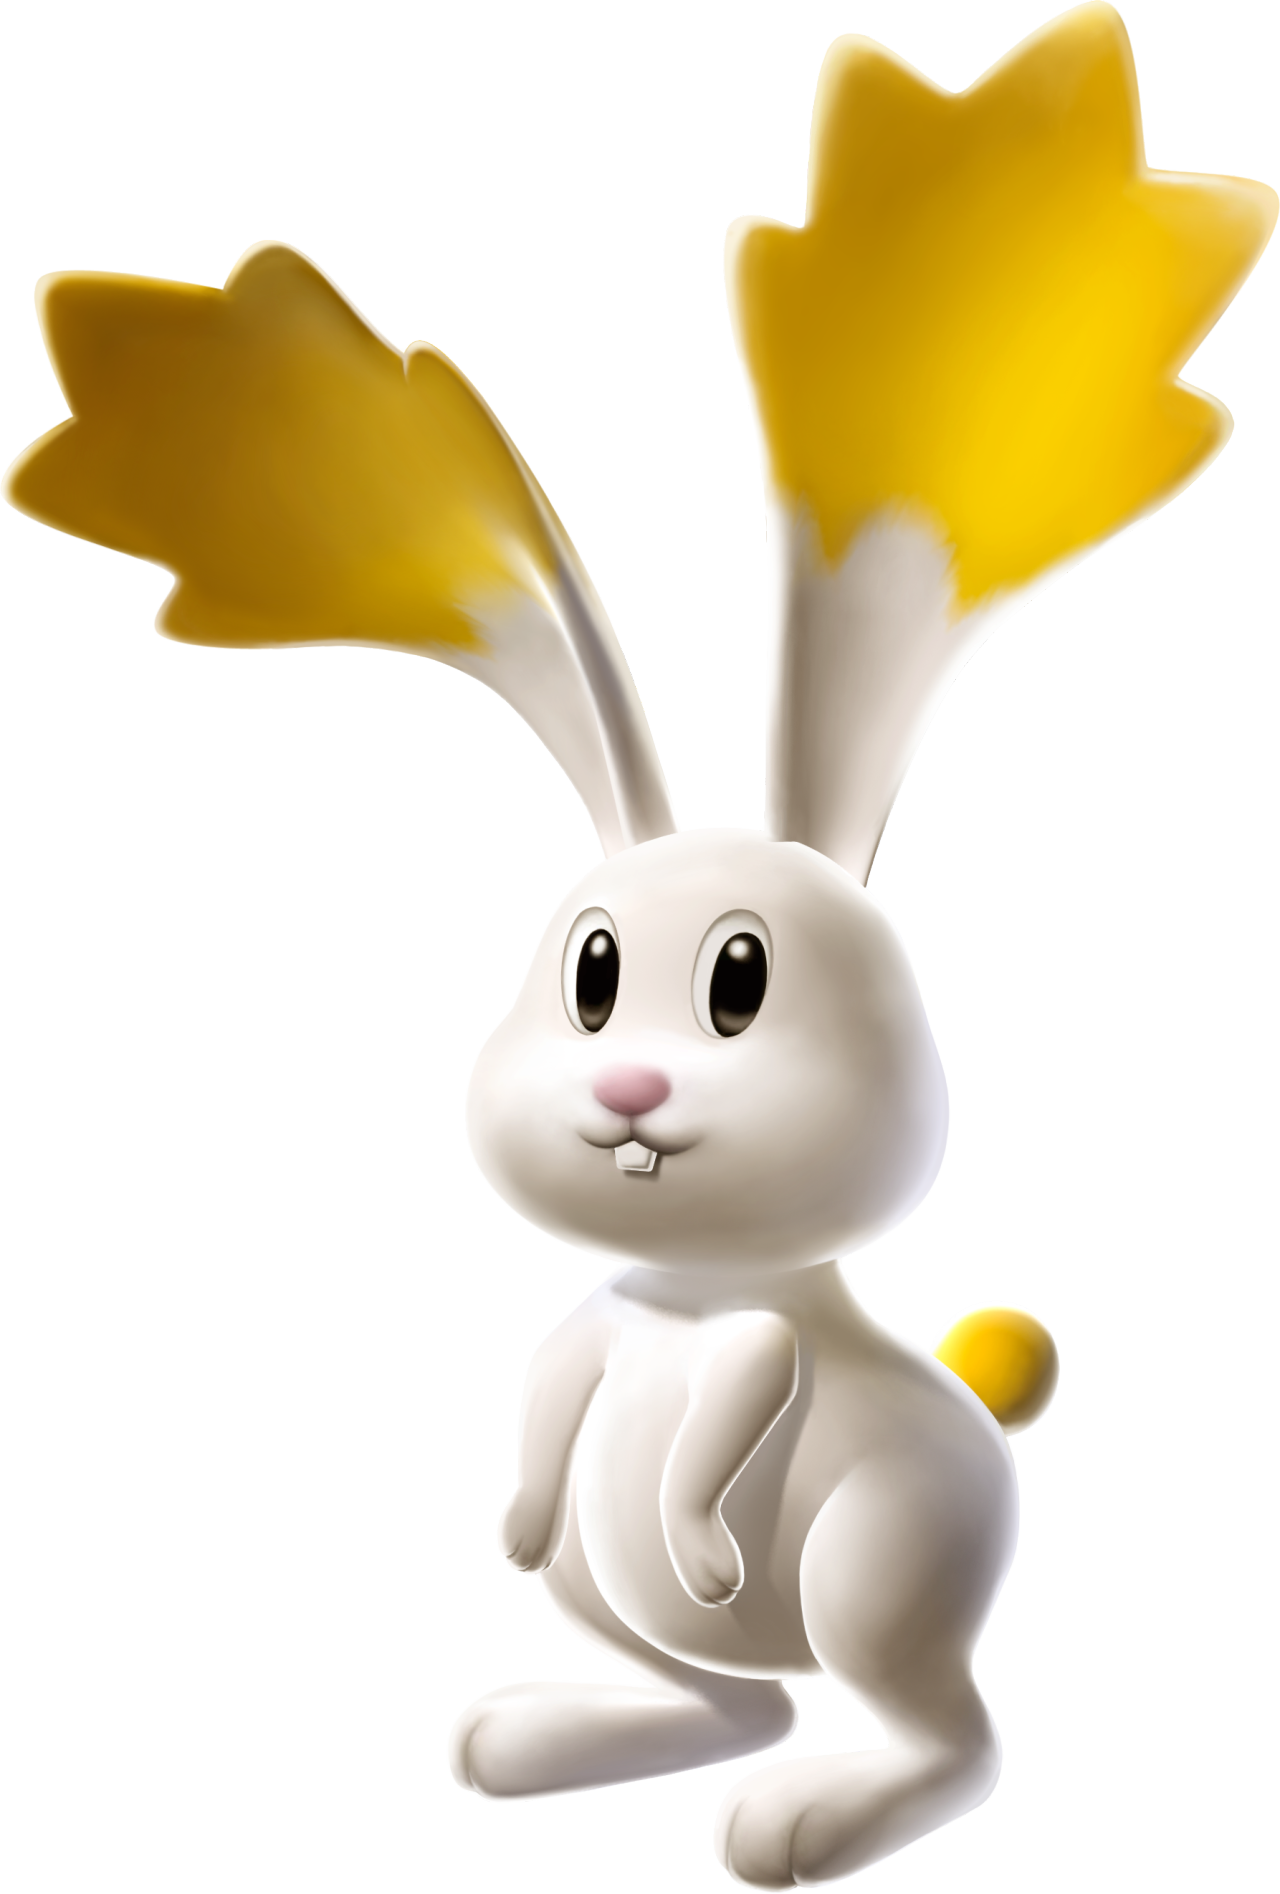 A Cartoon Rabbit With Yellow Ears